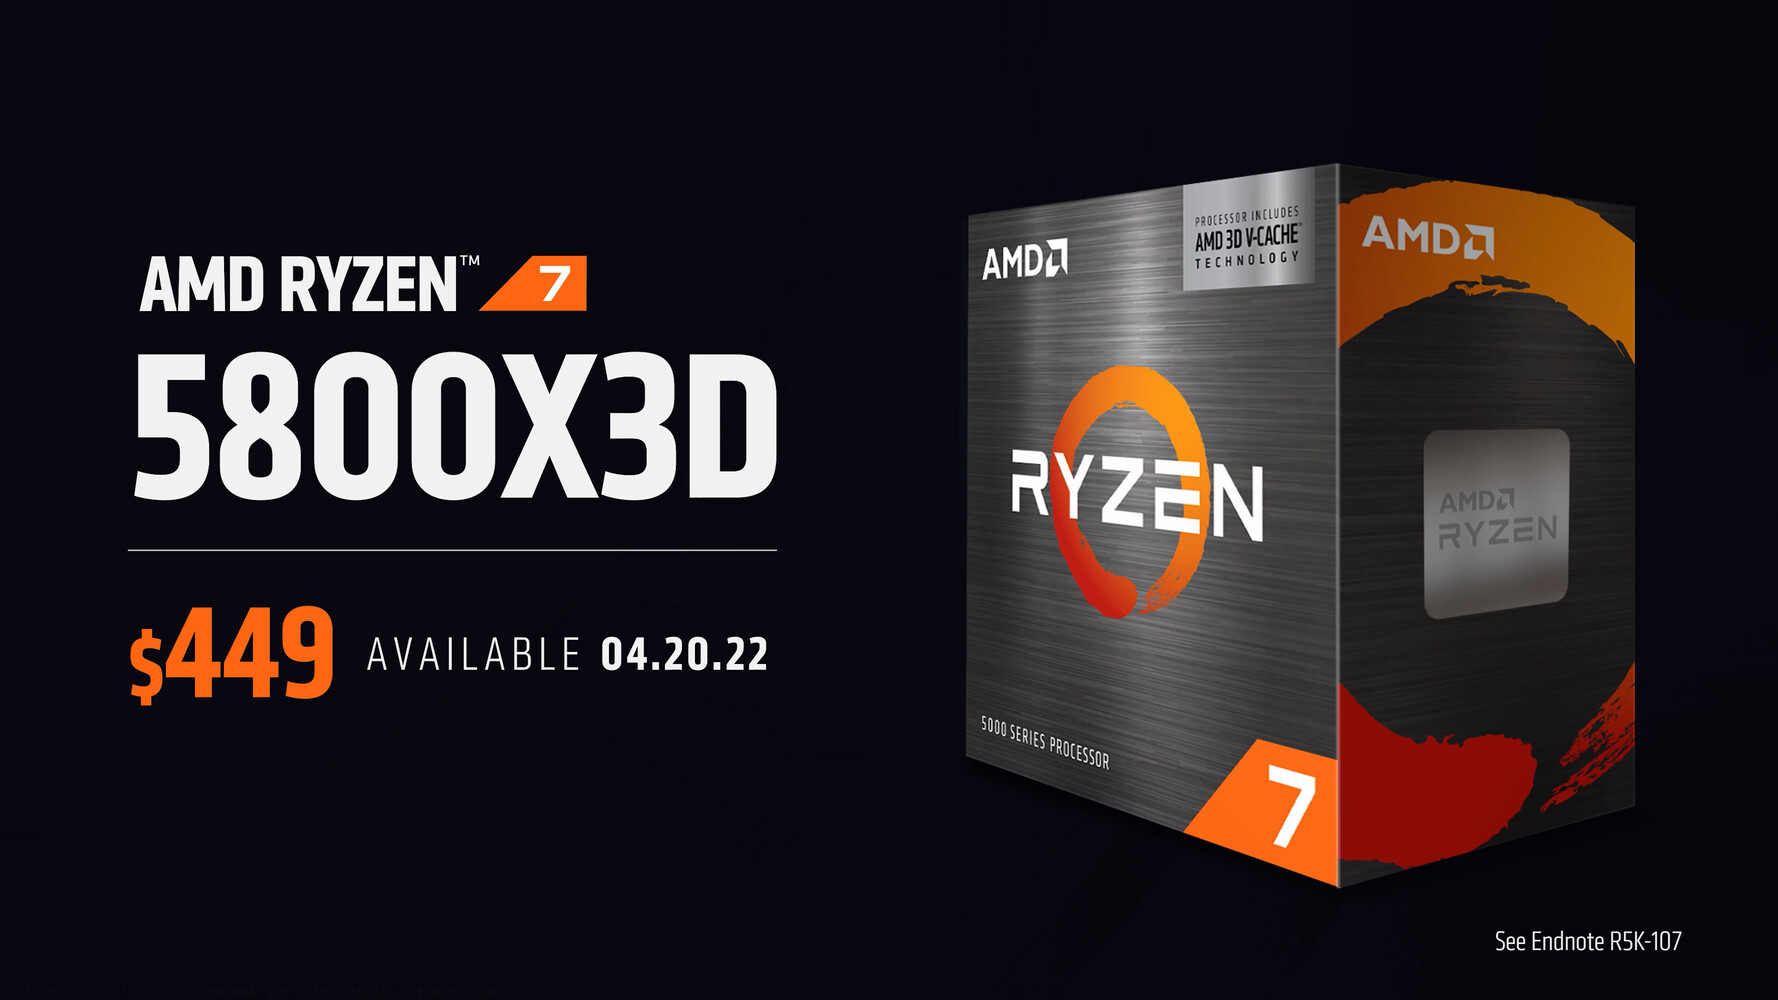 AMD Announces Ryzen 7 5800X3D, World's Fastest Gaming Processor